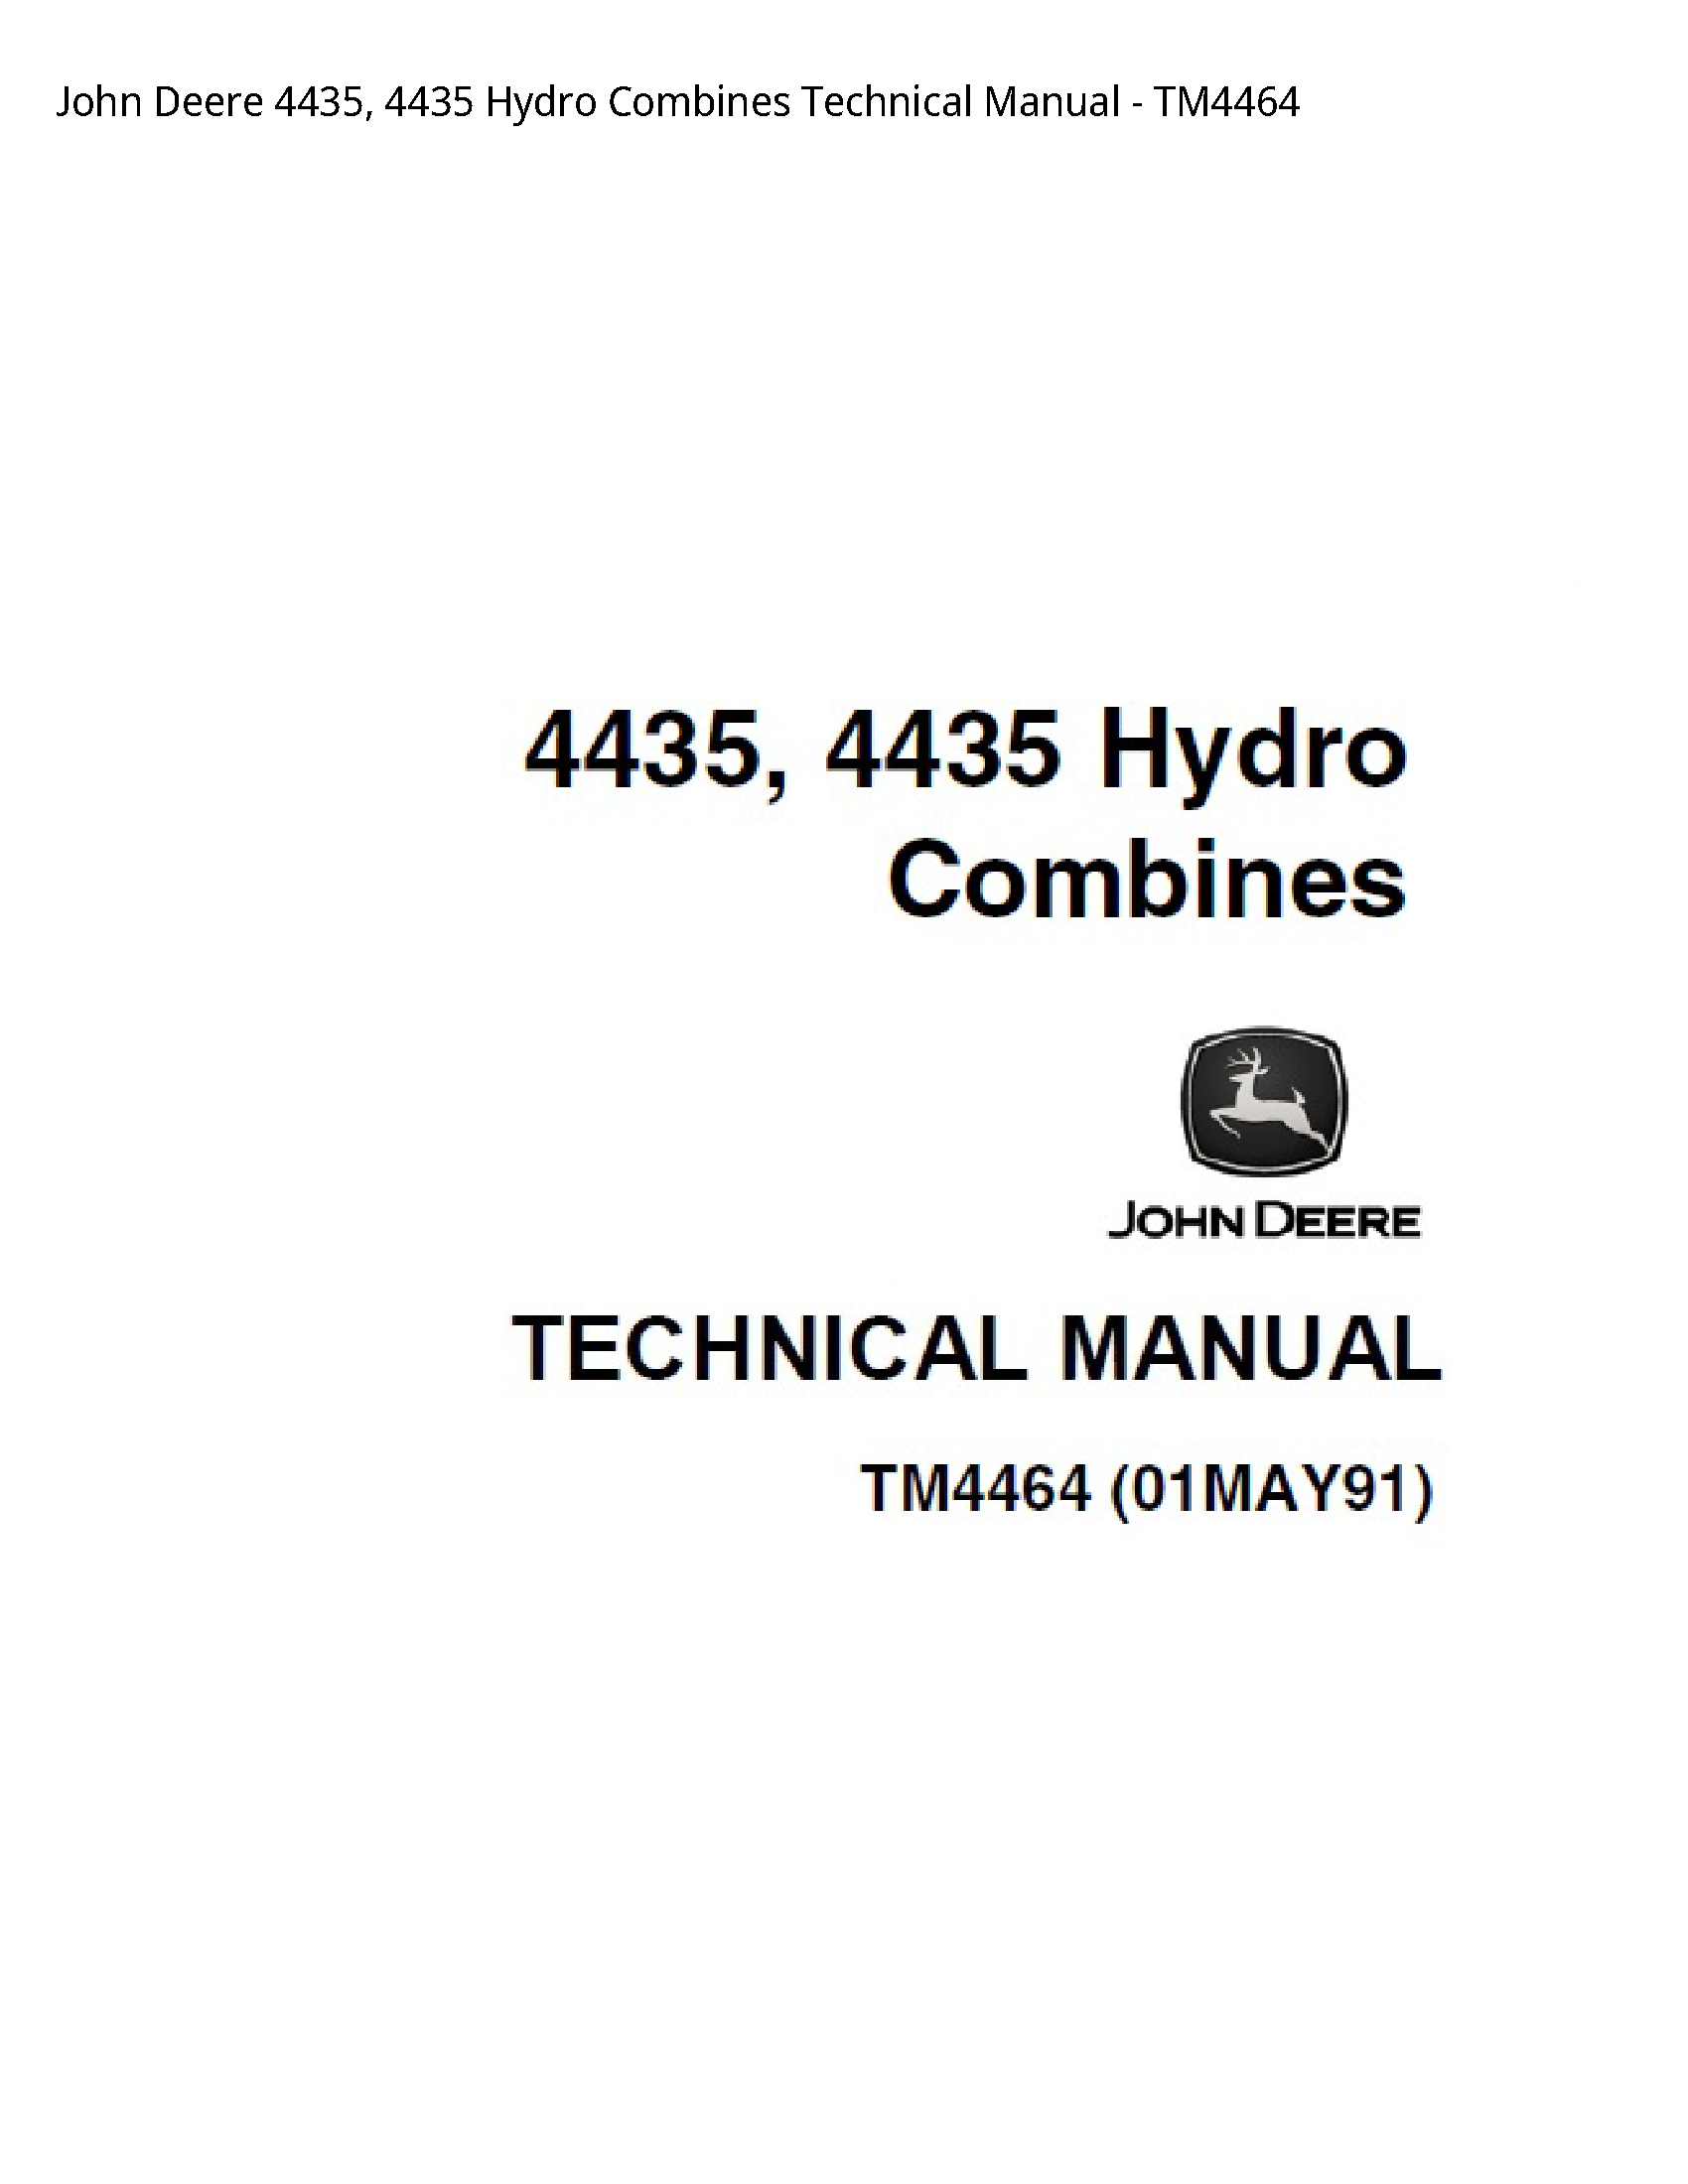 John Deere 4435 Hydro Combines Technical manual